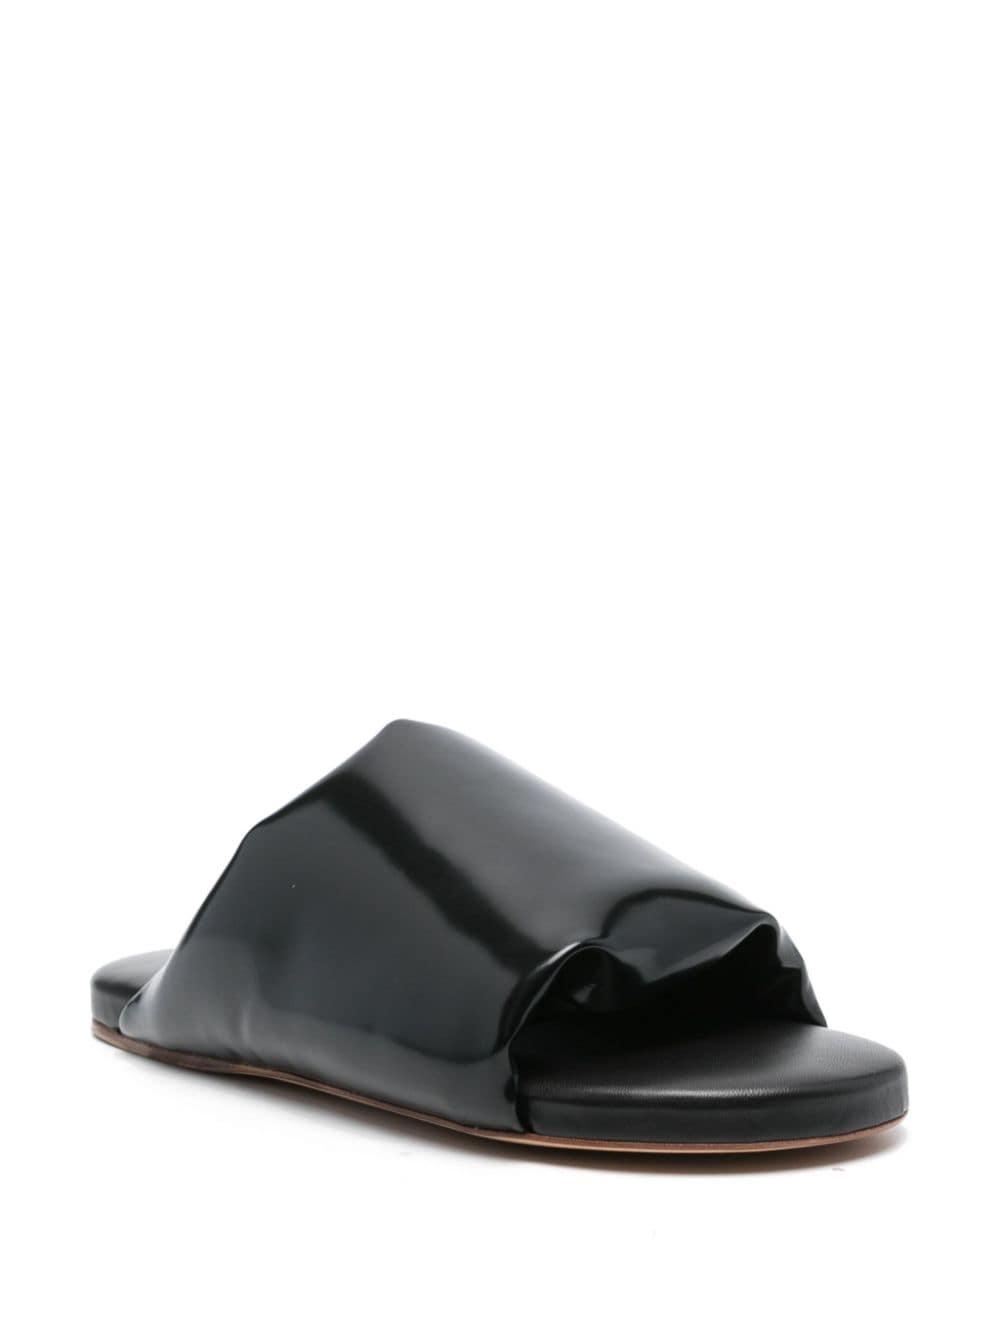 Bottega Veneta padded leather flat sandals - Zwart